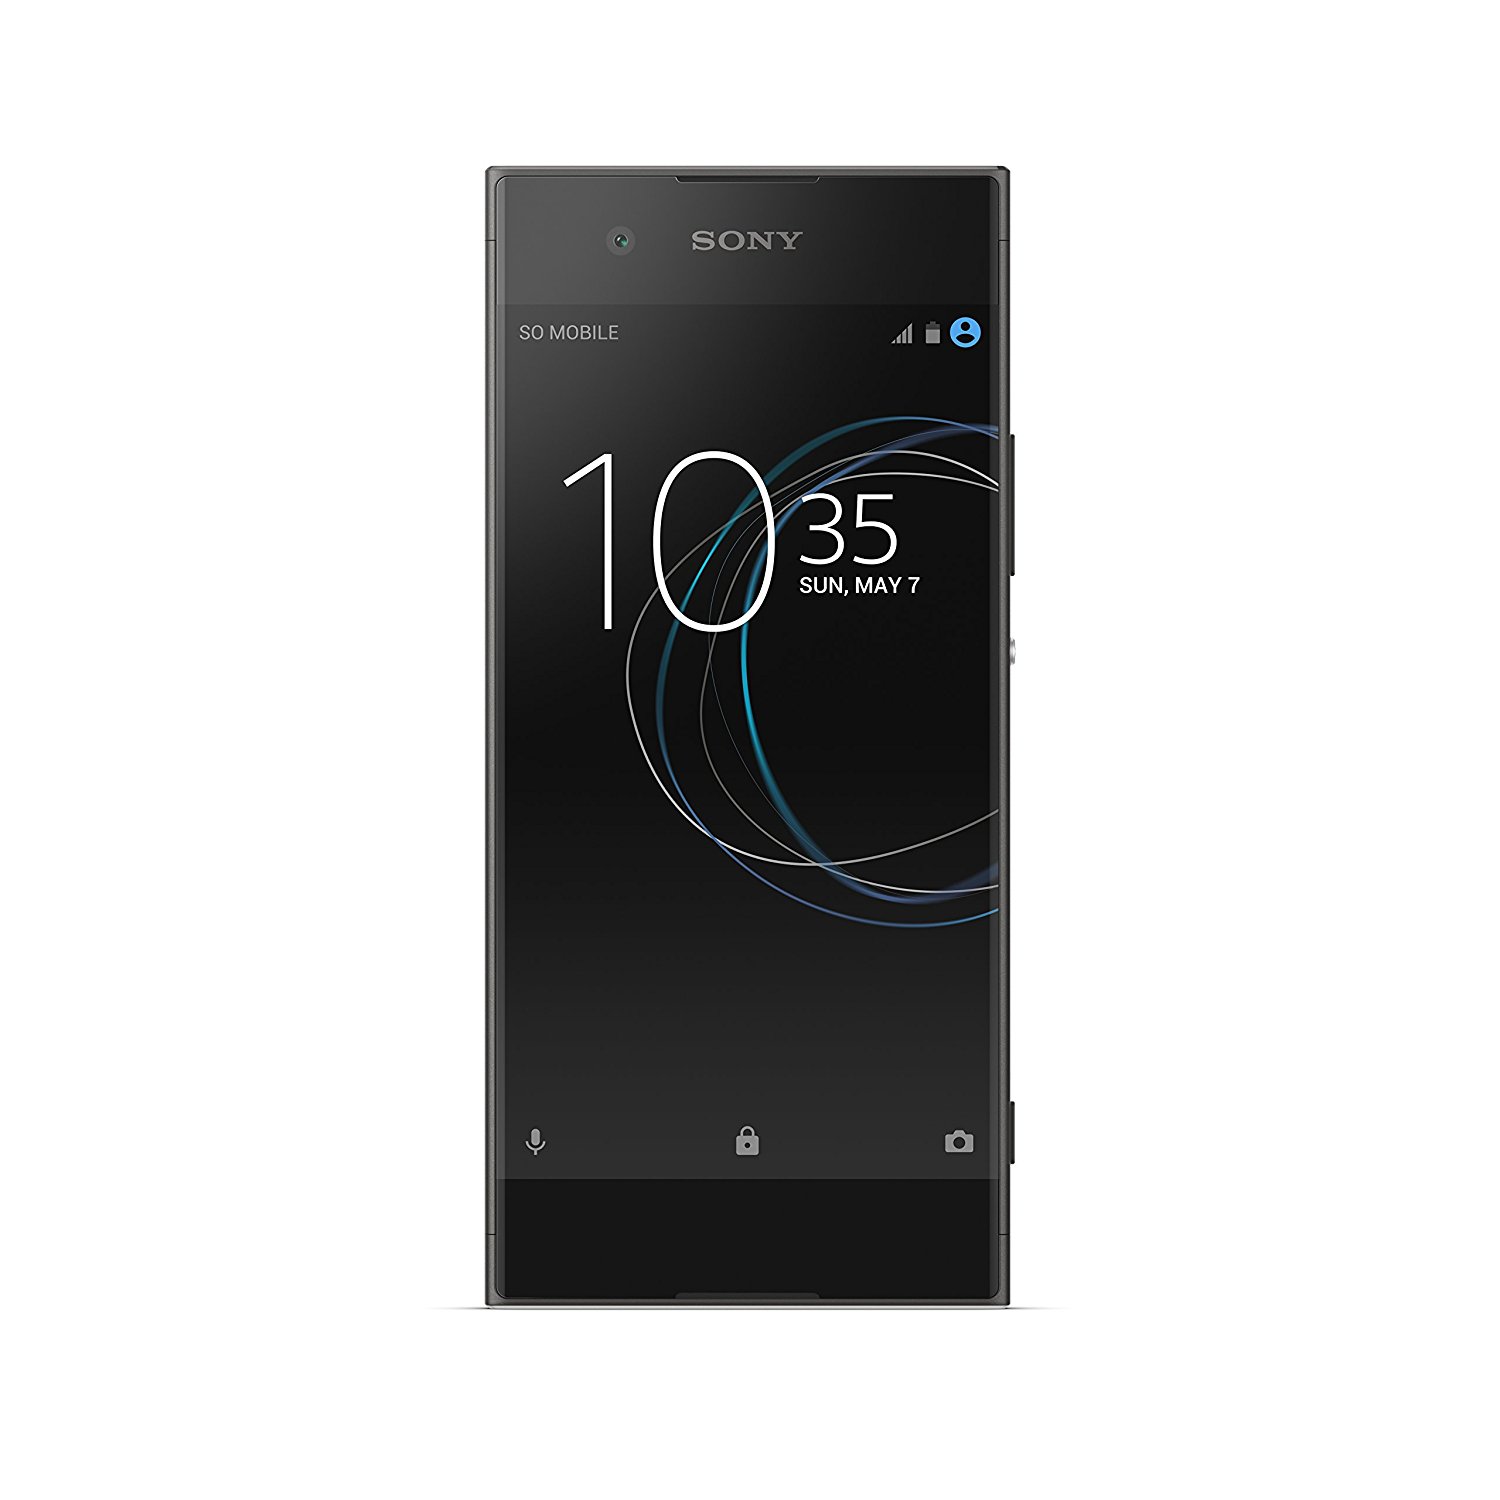 Sony Computer Entertainment Sony Xperia XA1 - Smartphone desbloqueado - 32 GB - Preto (garantia nos EUA)